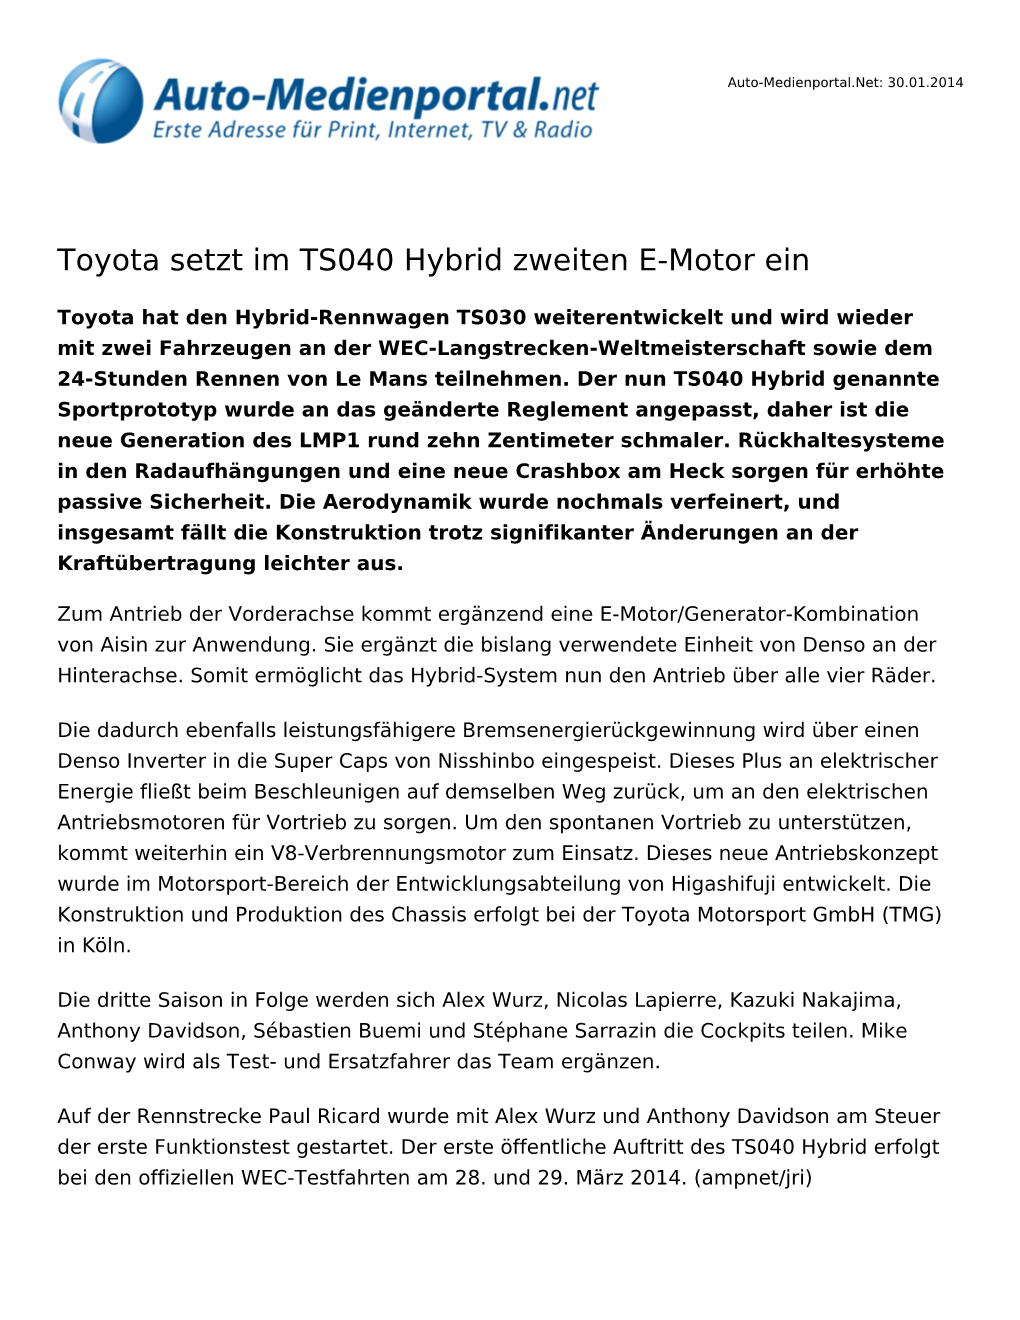 Toyota Setzt Im TS040 Hybrid Zweiten E-Motor Ein